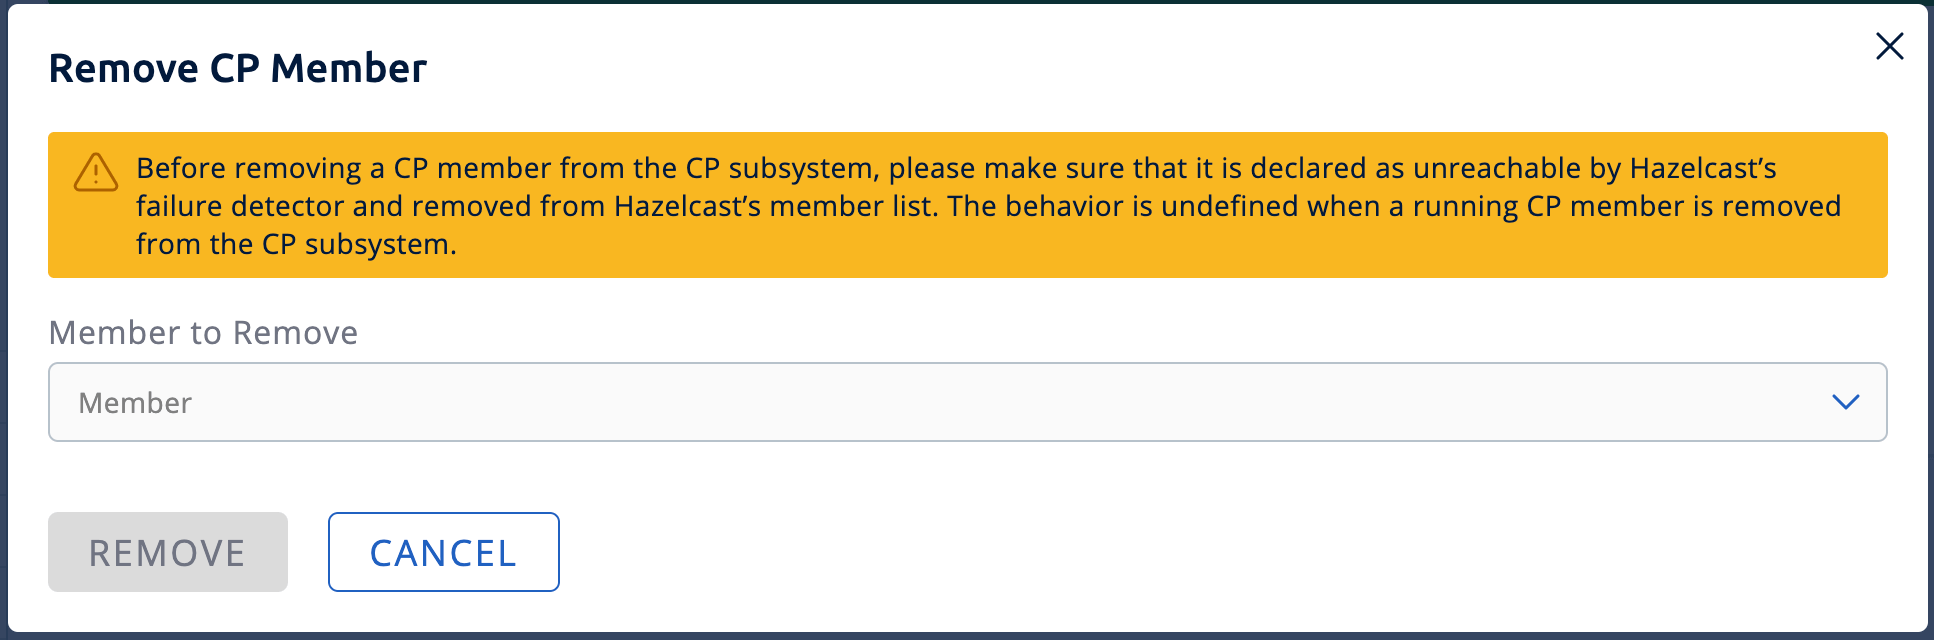 Remove CP Member Confirmation